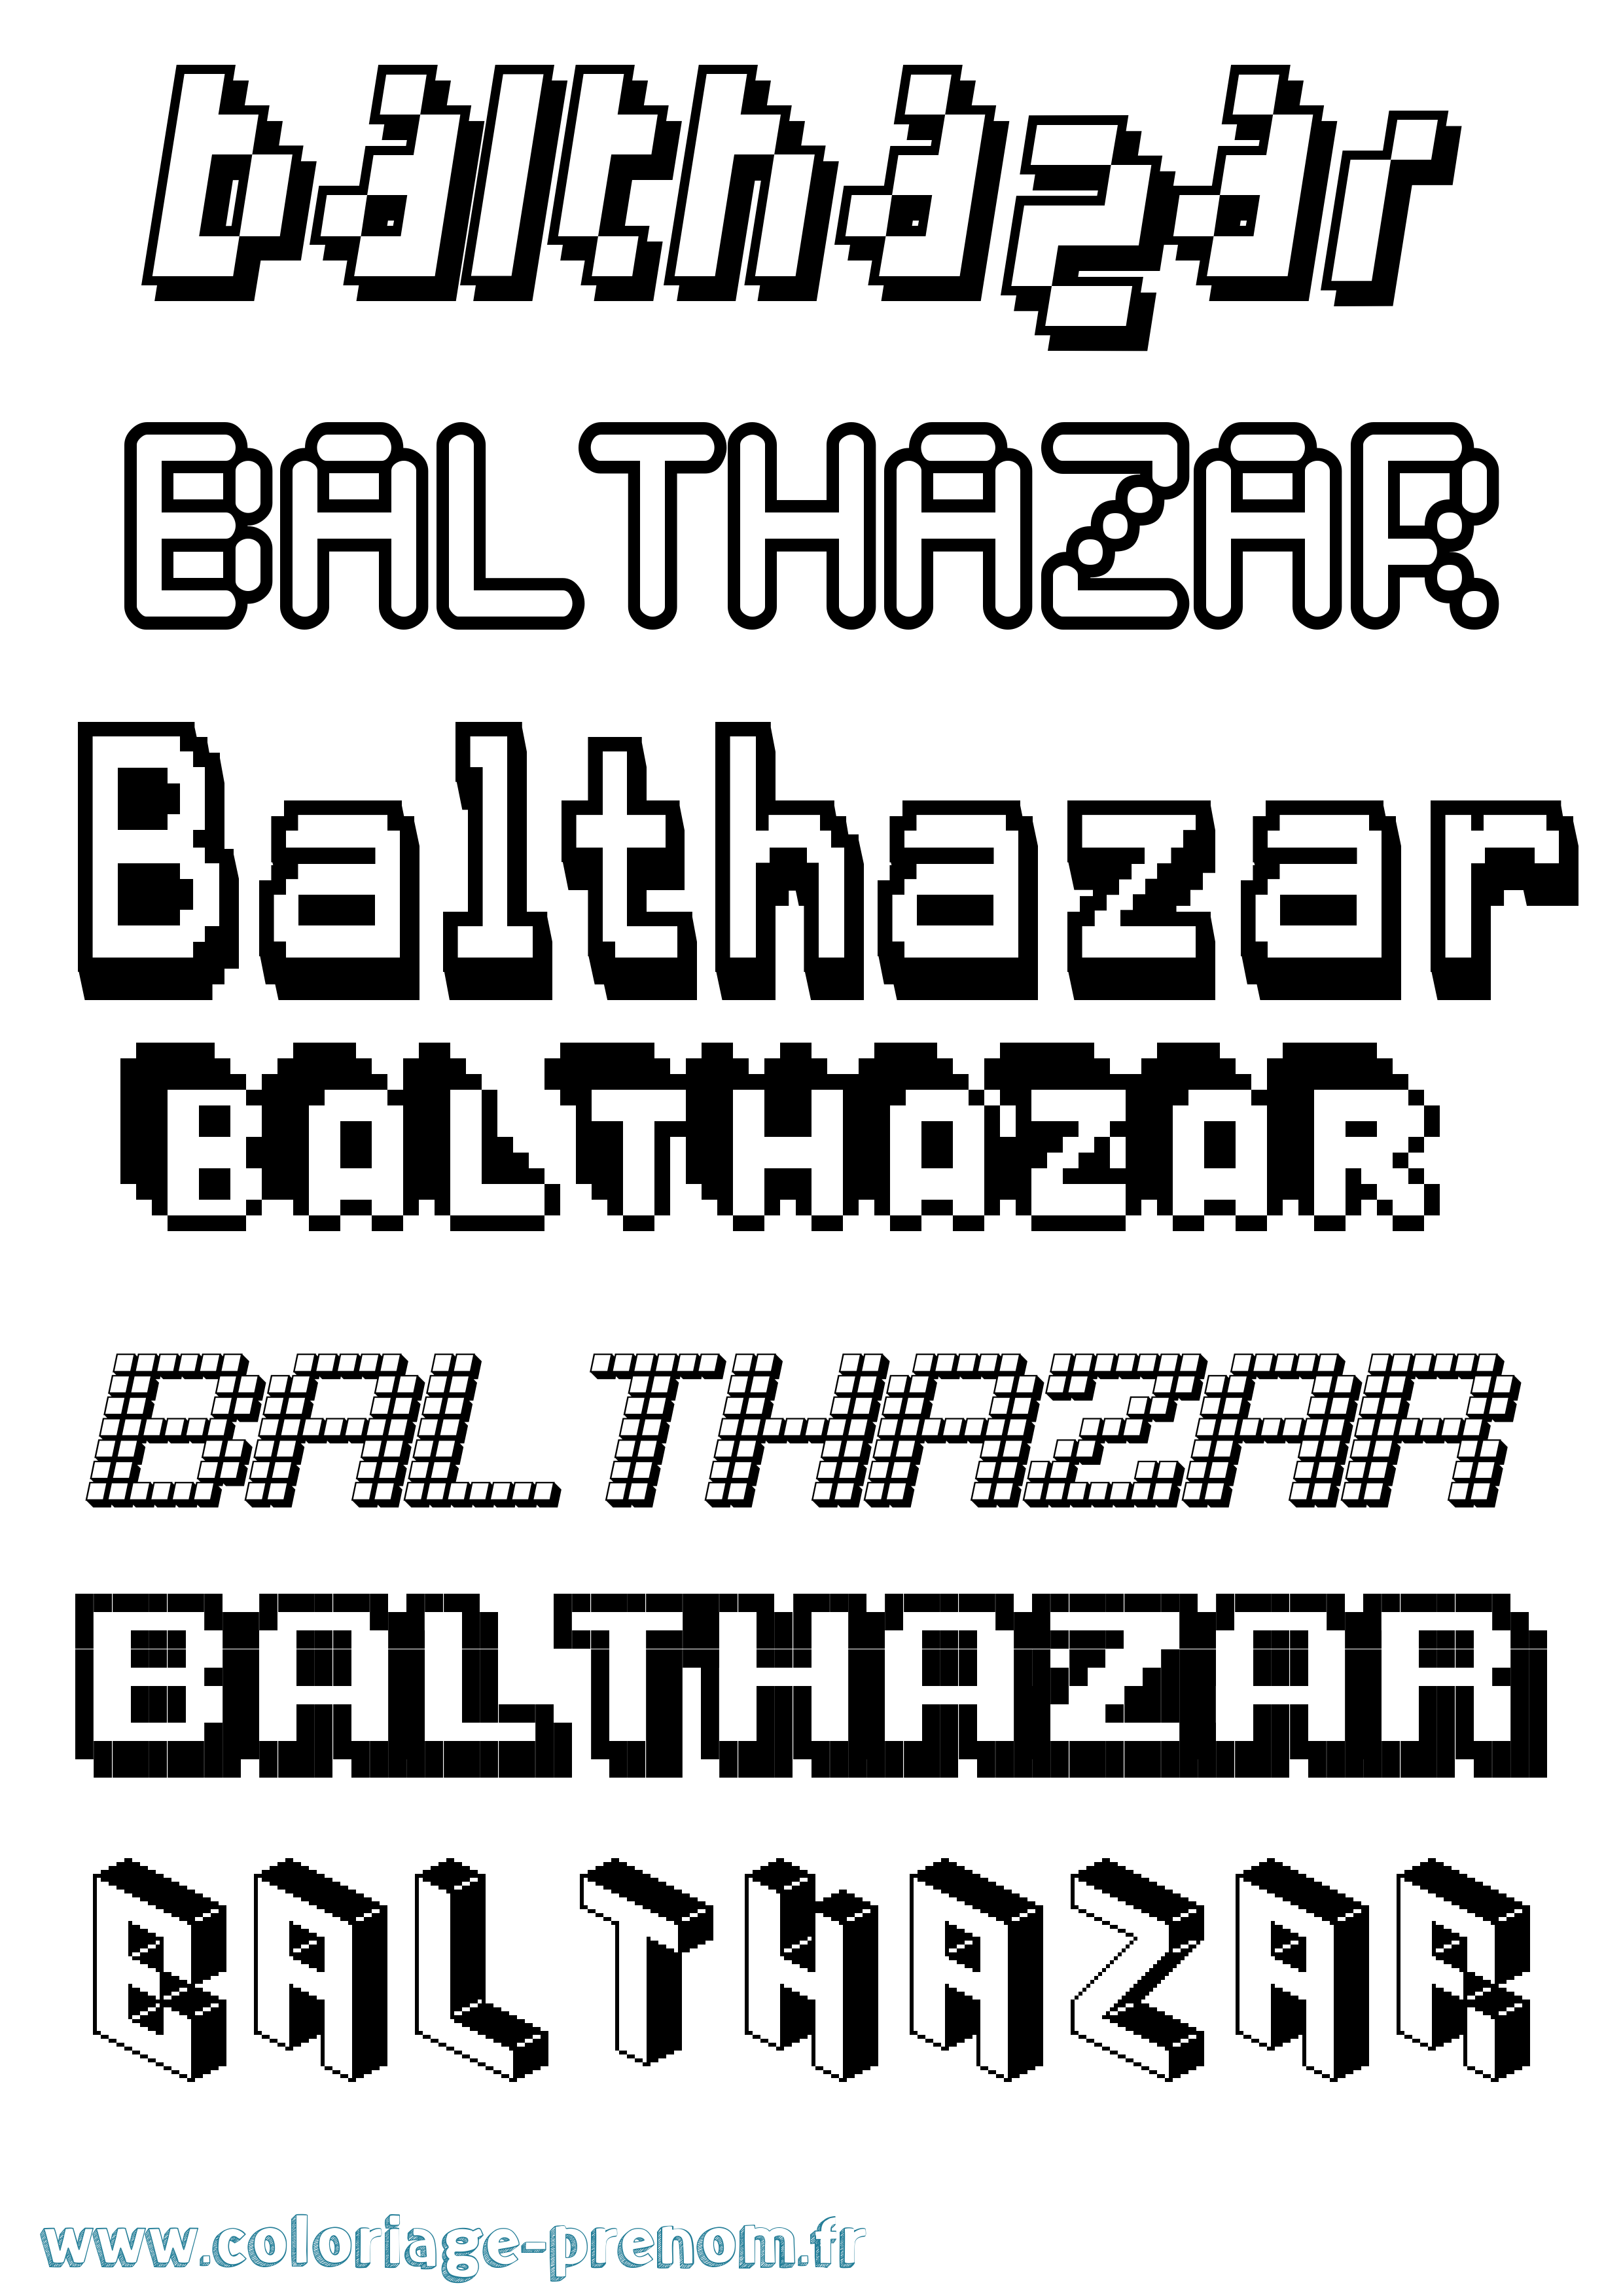 Coloriage prénom Balthazar Pixel